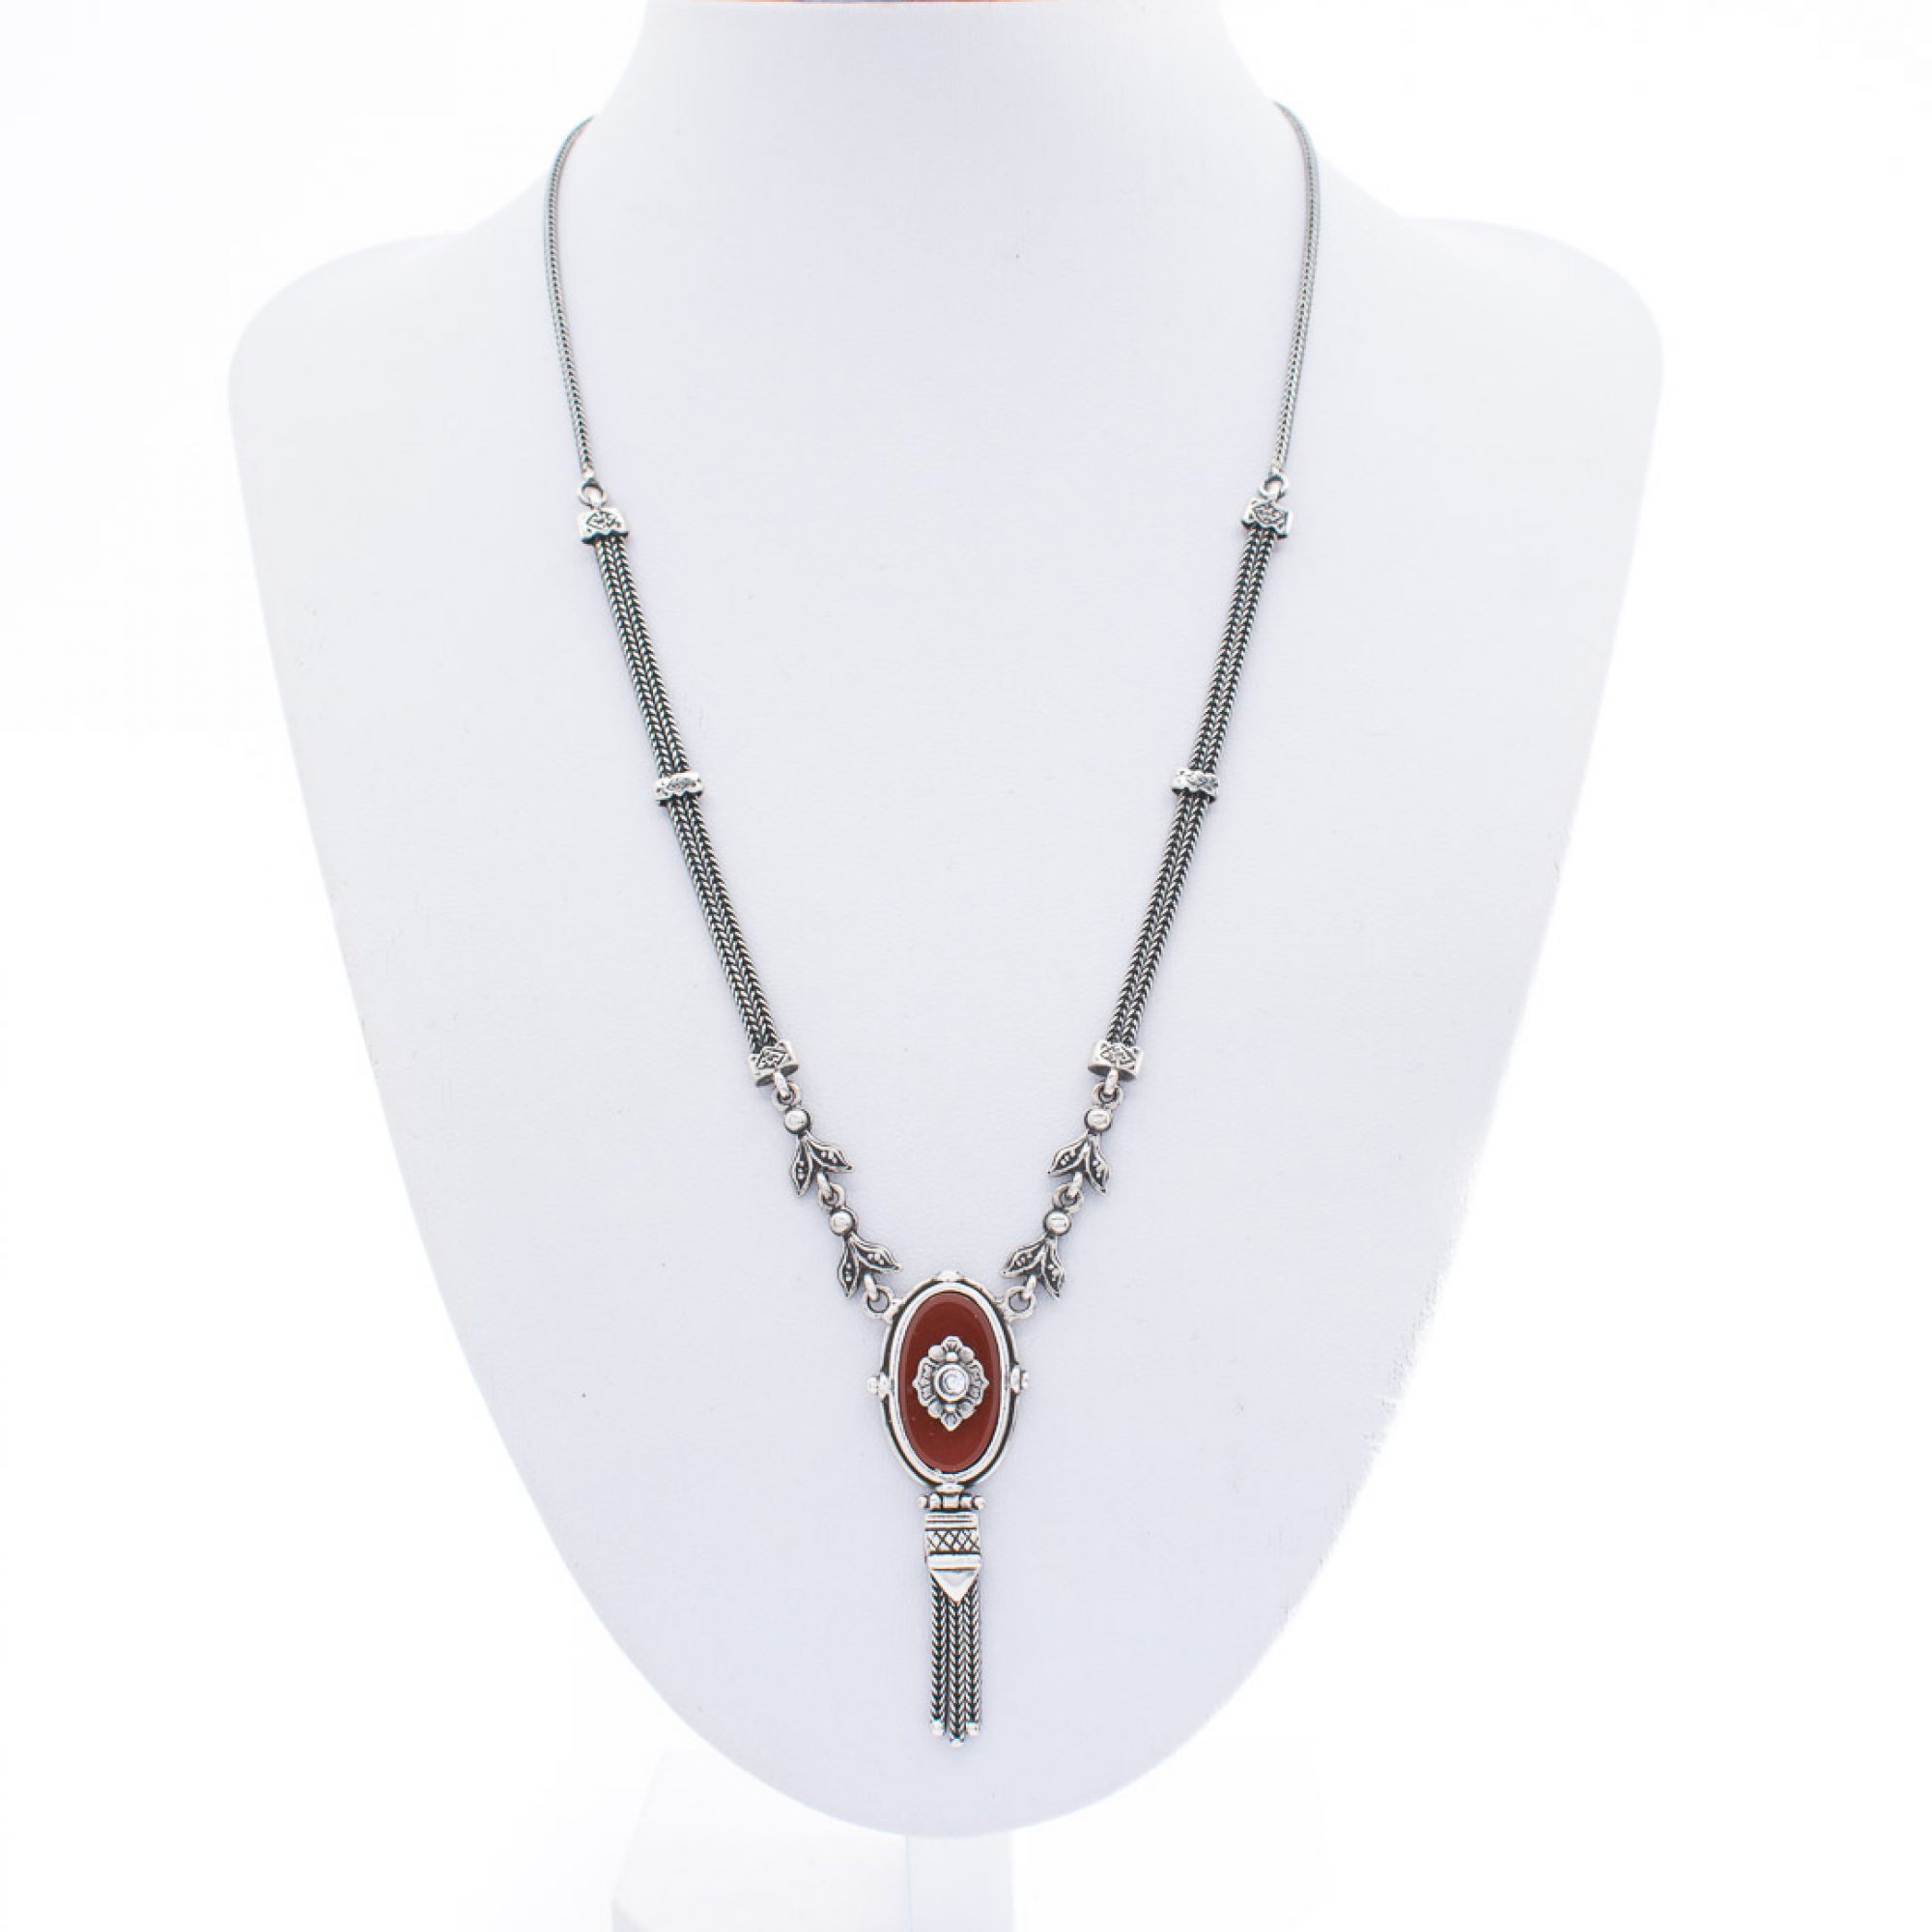 Oxidised necklace with carnelian and zircon stones